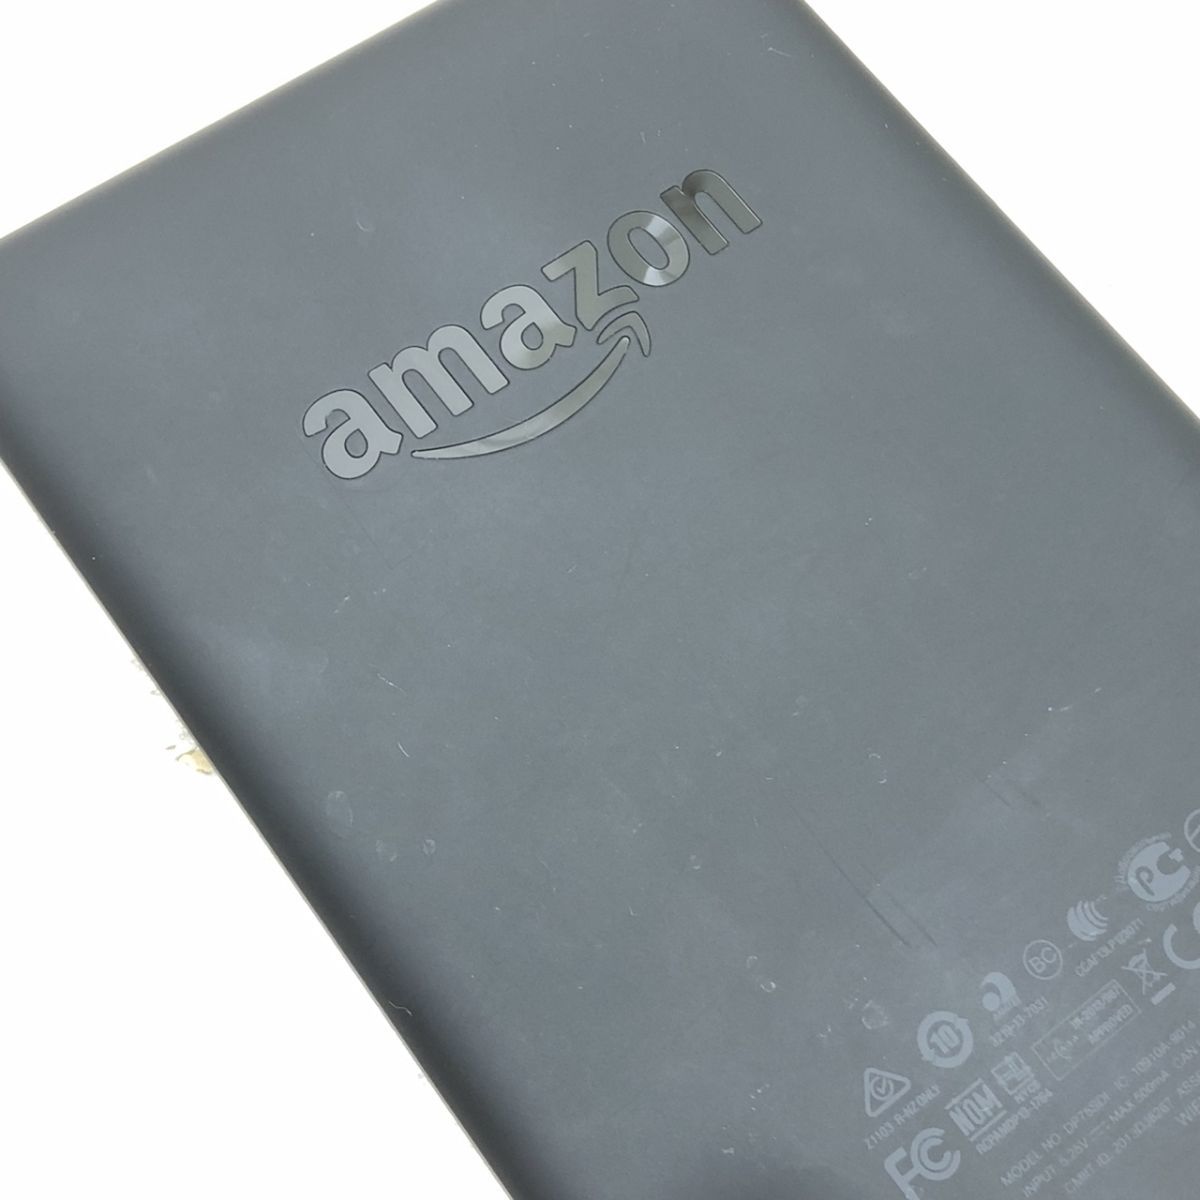  postage 185 jpy amazon Kindle Paperwhite Amazon gold dollar paper white DP75SDI no. 6 generation 4GB[Q2291]